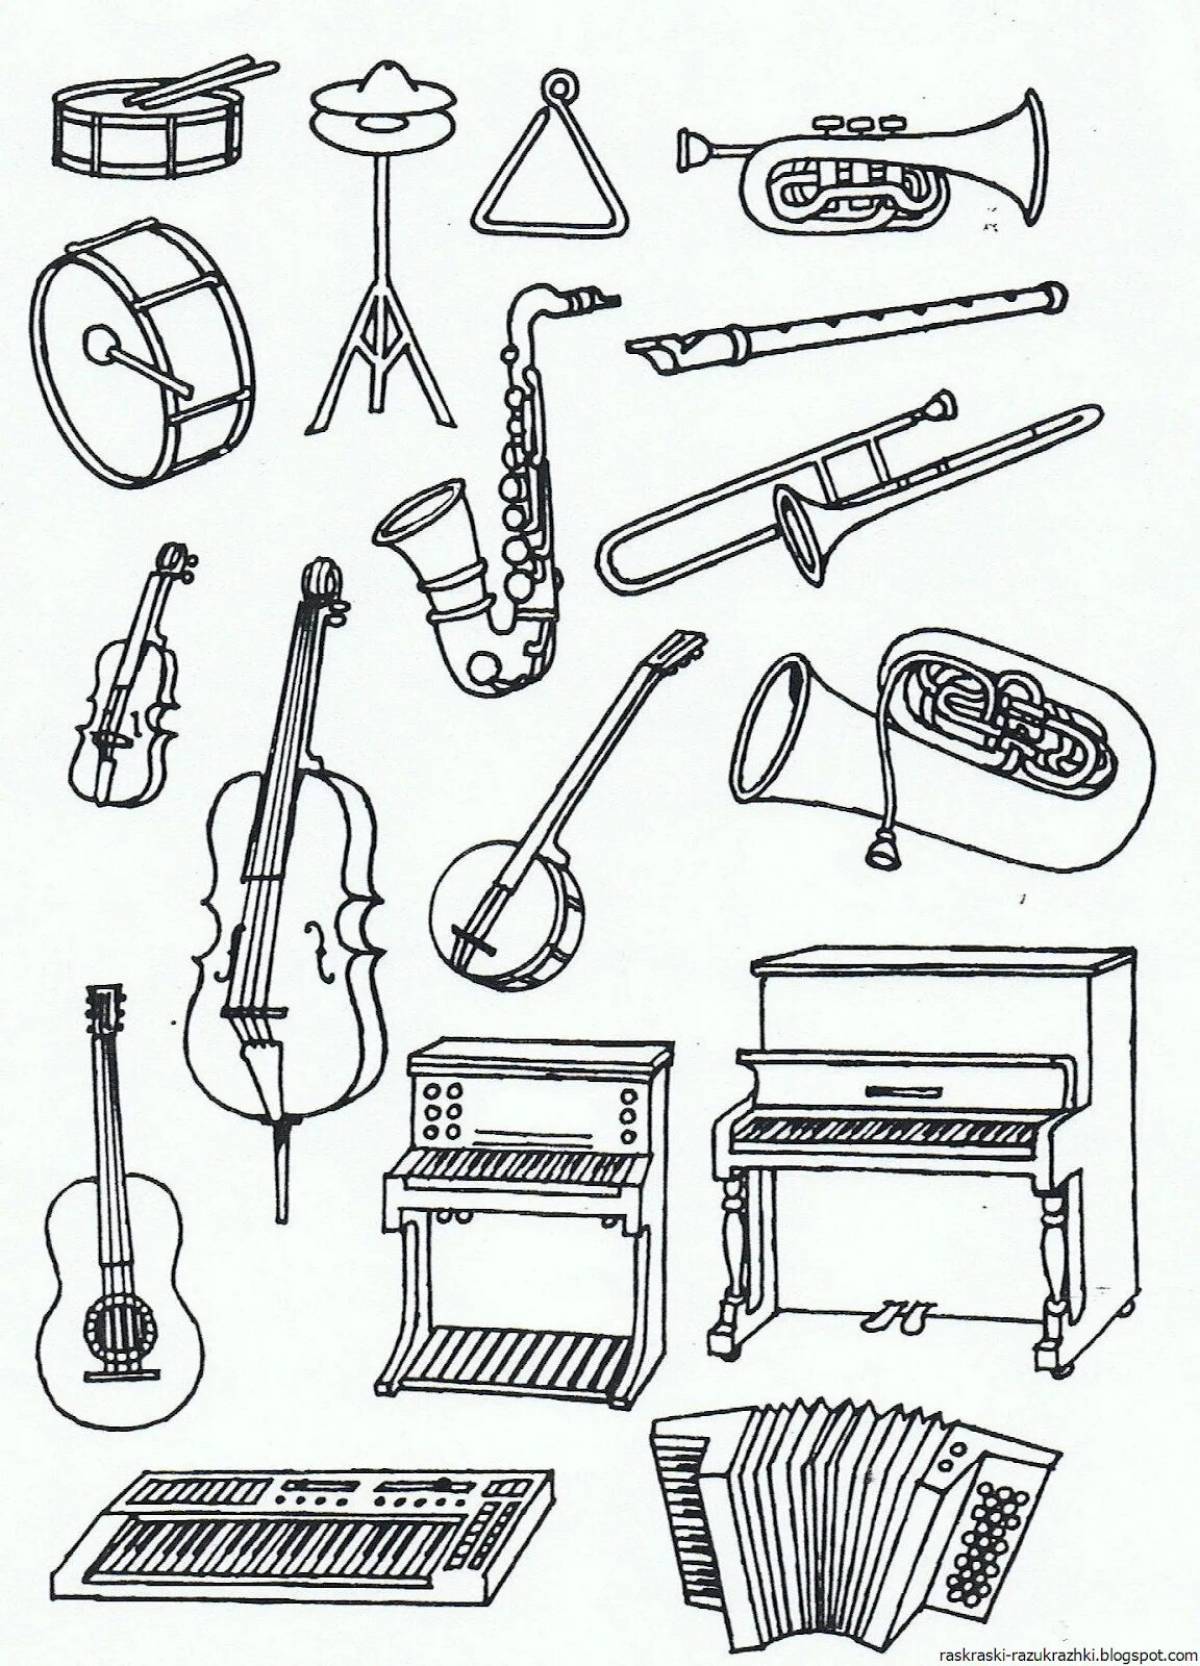 Musical instruments 2 class #3